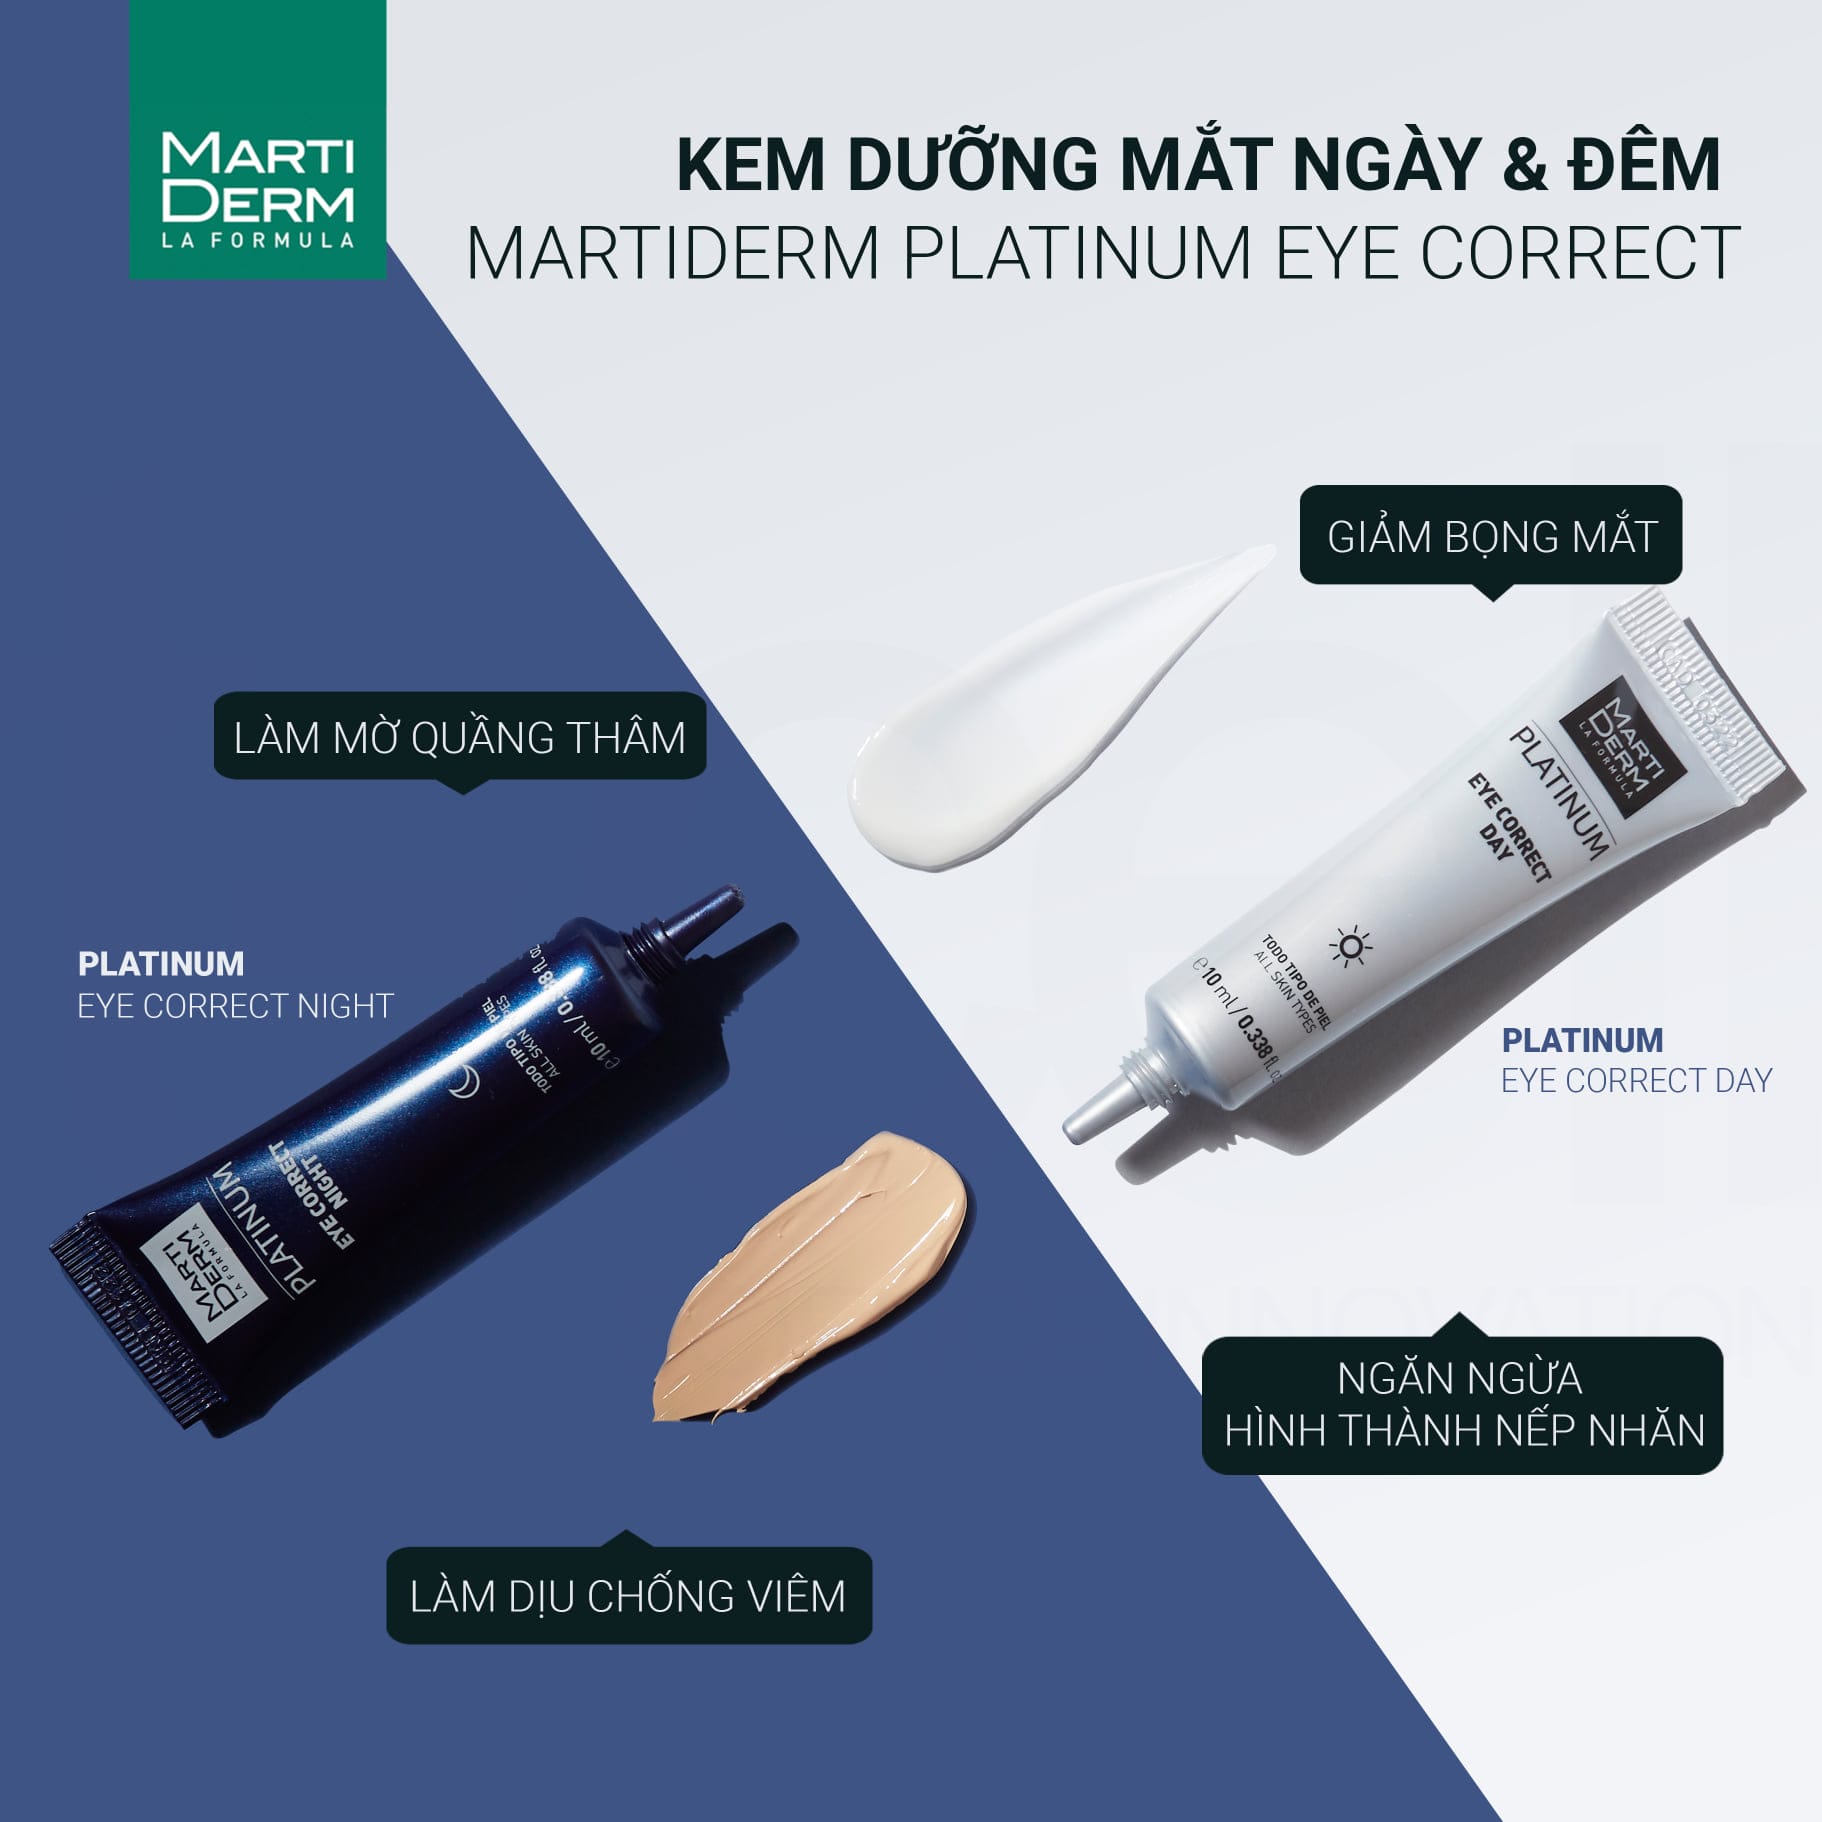 Kem Duong Giam Bong Mat Quang Tham MartiDerm Platinum Eye Correct 2 x 10ml 3